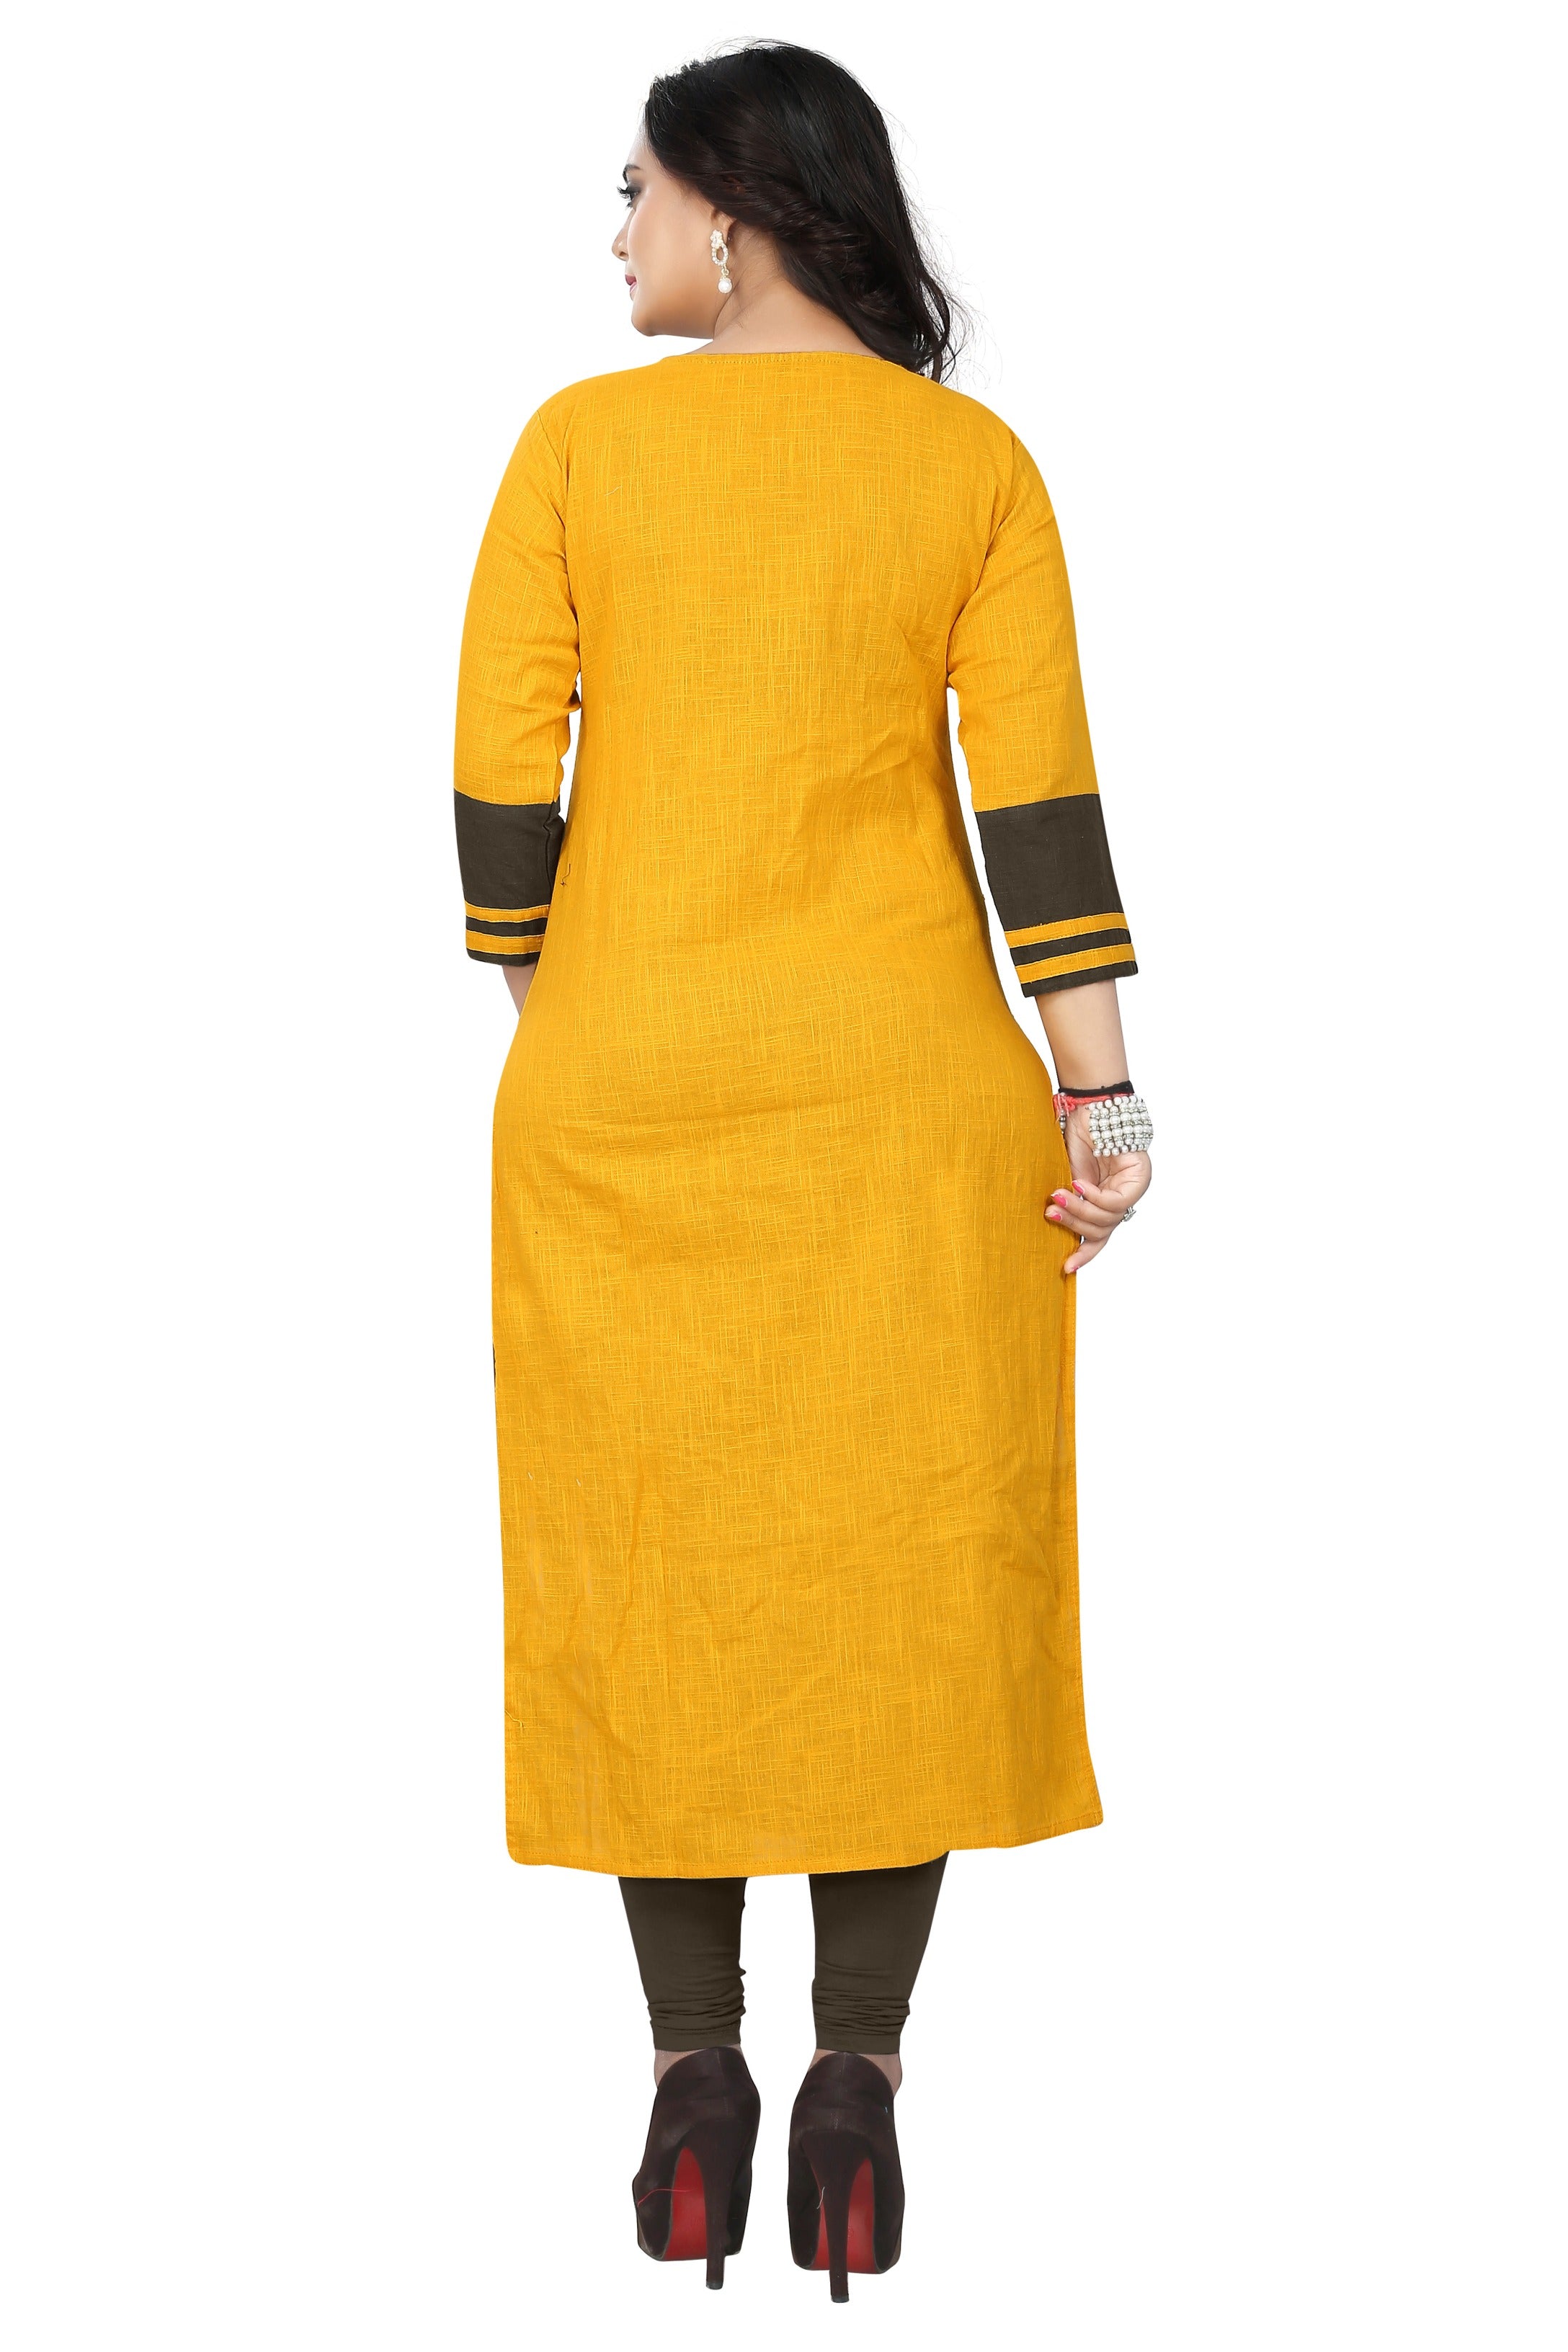 Women's Yellow Cotton Kurta By Vbuyz (1 Pc Set)